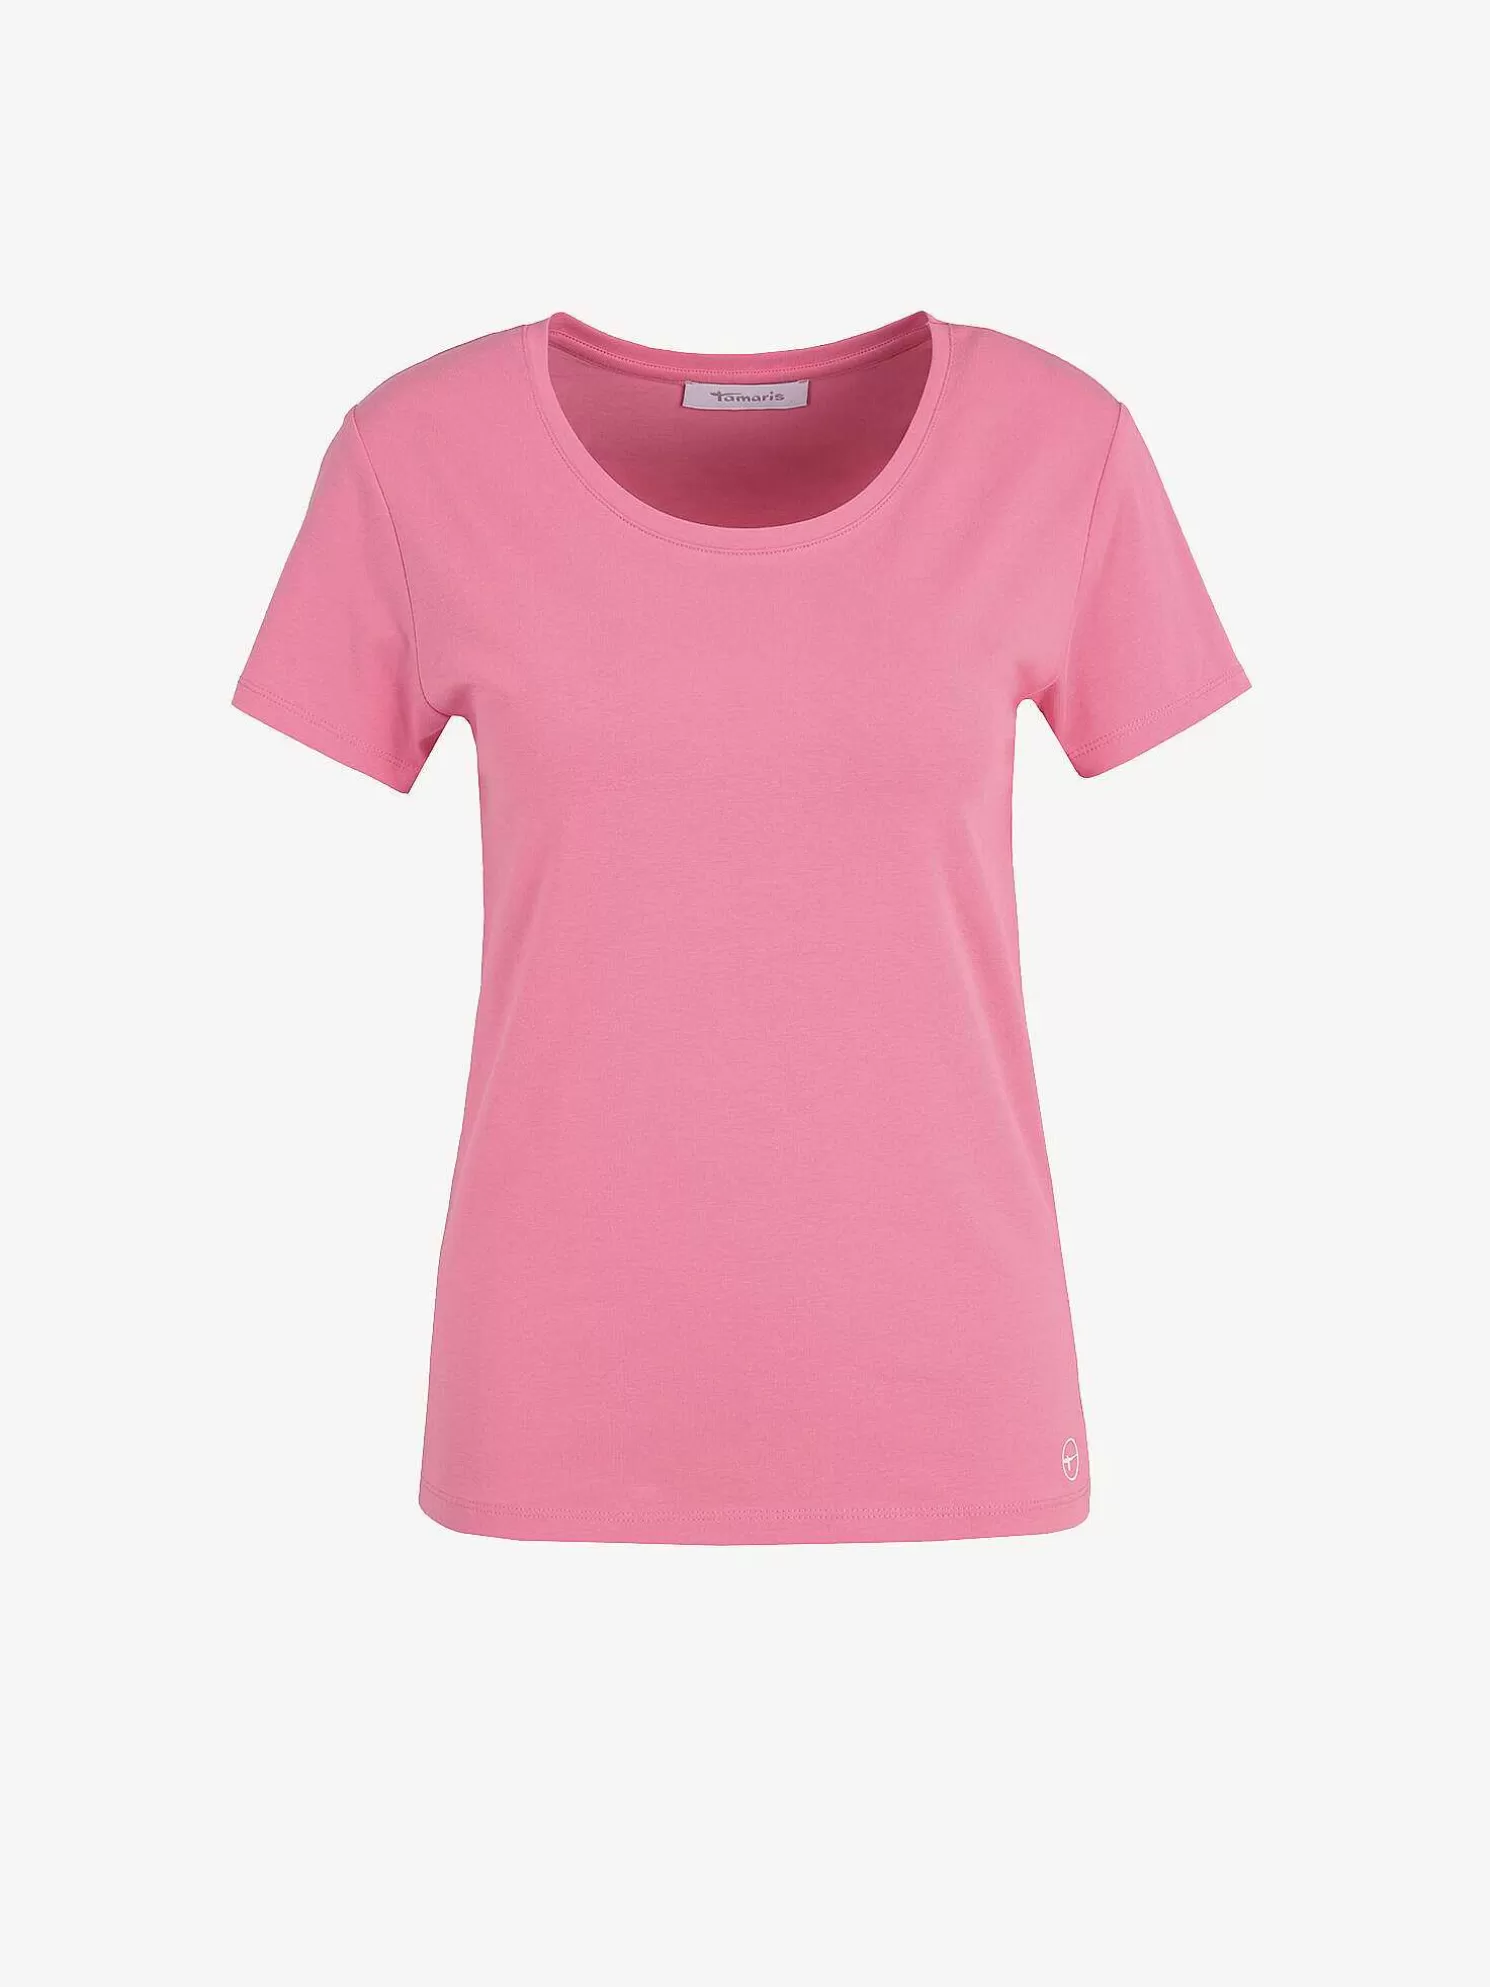 T-Shirt - Rosa*Tamaris Clearance